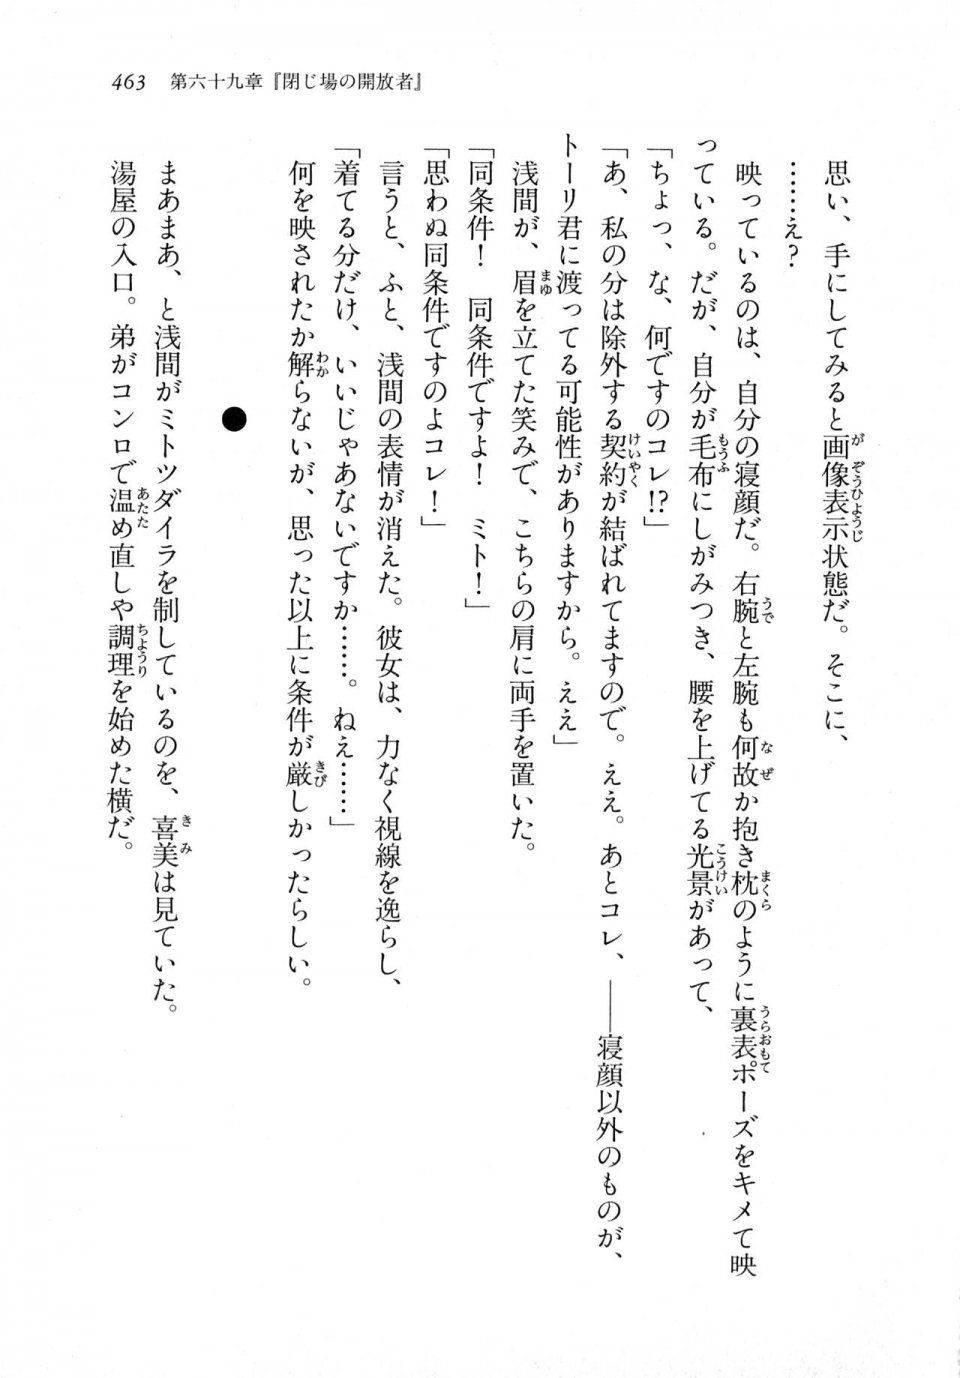 Kyoukai Senjou no Horizon LN Vol 18(7C) Part 1 - Photo #463